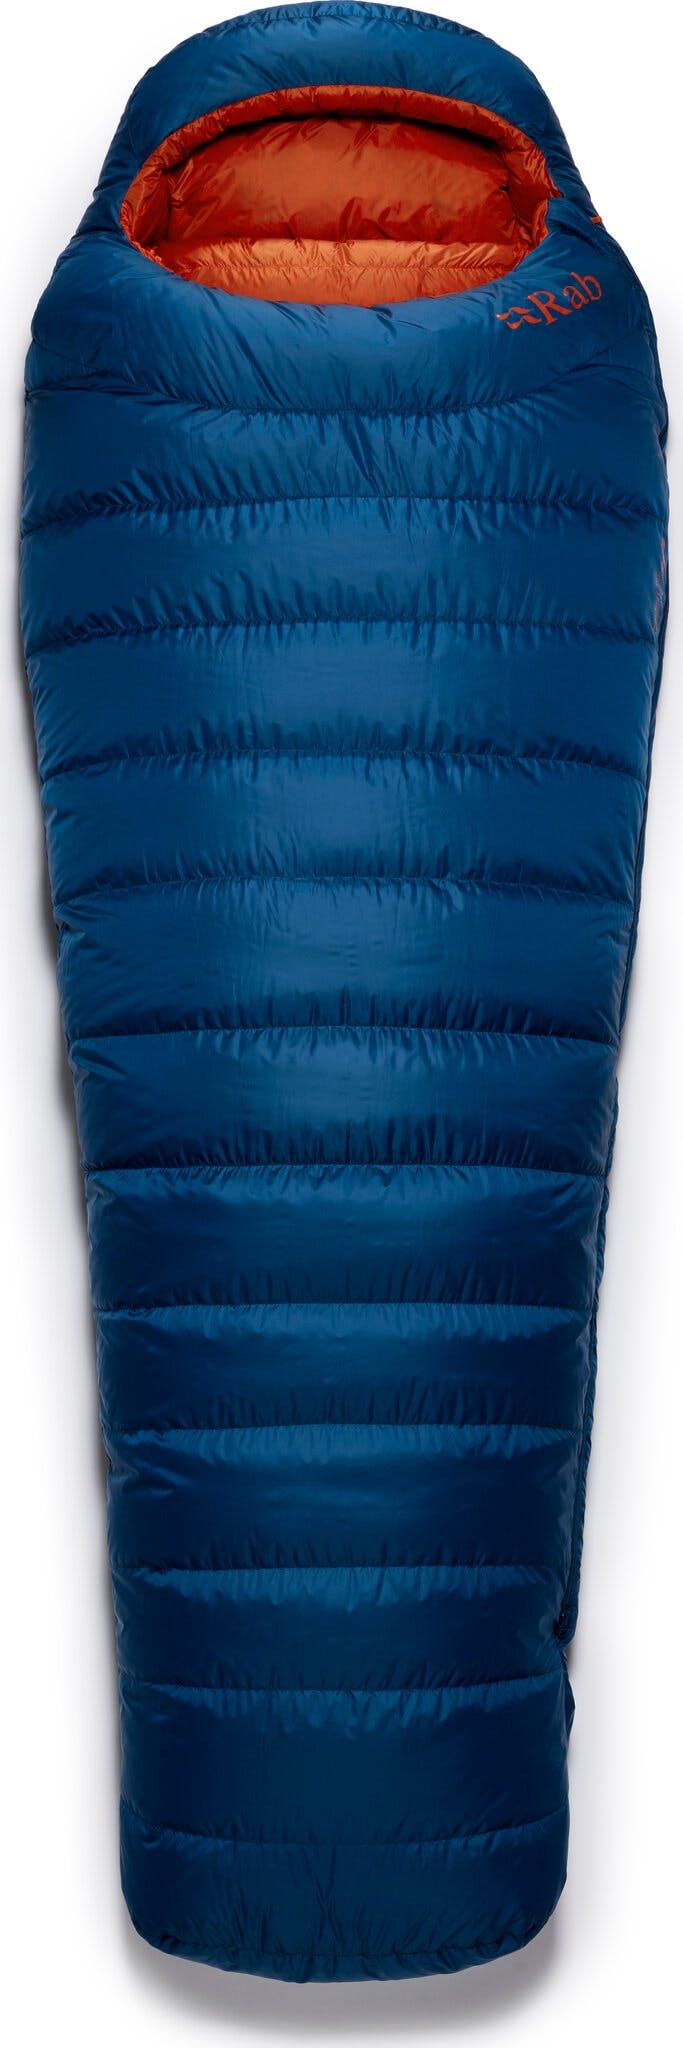 Product image for Ascent 700 Down Sleeping Bag Left Zip - Regular -9C / 15F - Women's